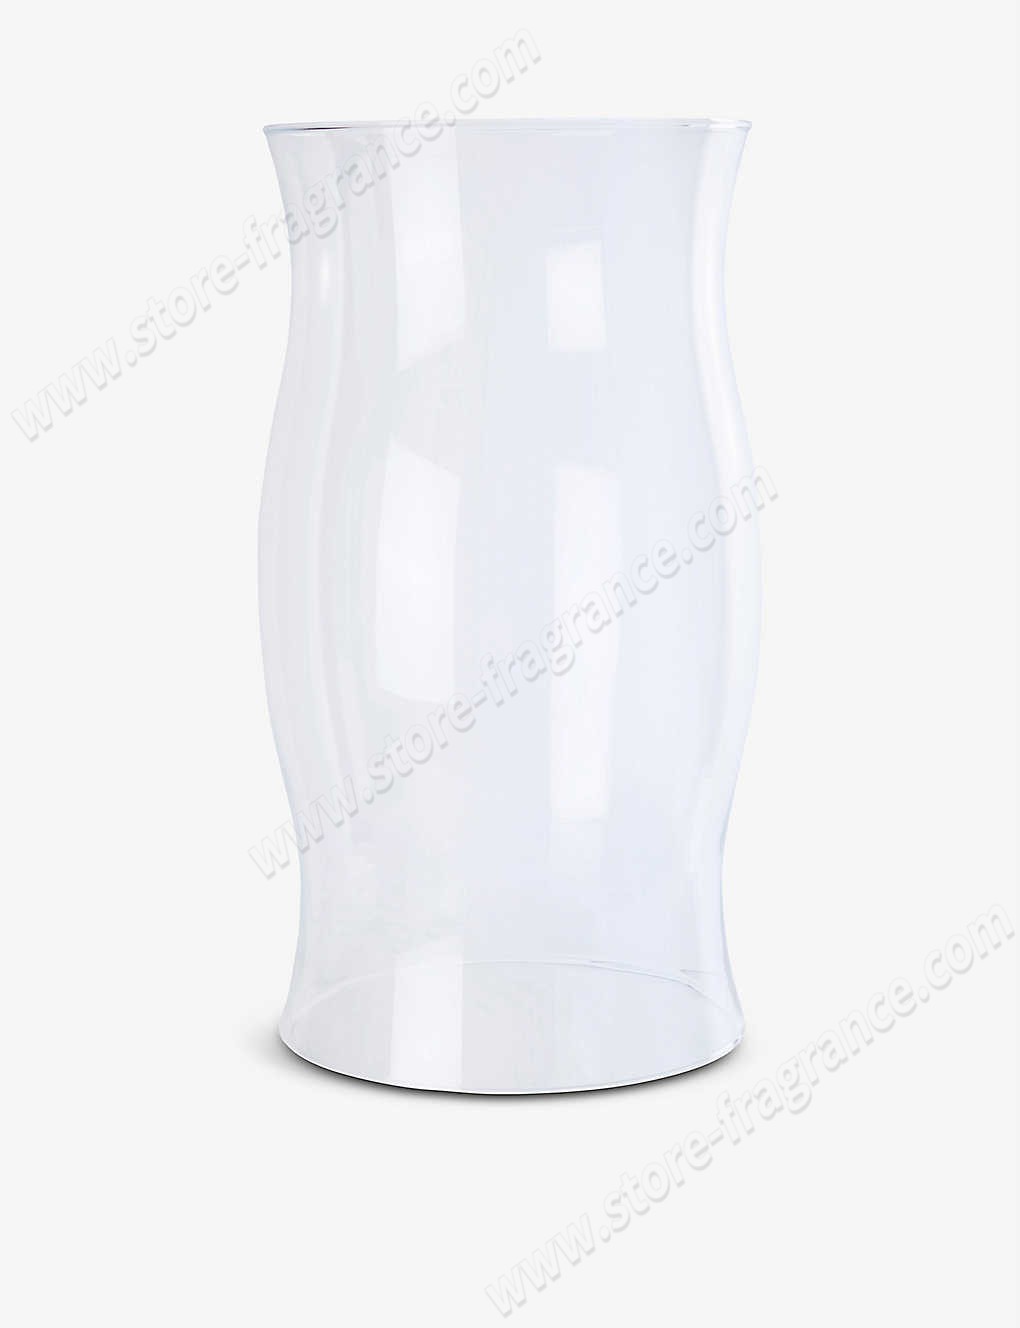 THE WHITE COMPANY/Crystal glass hurricane lantern 45cm ✿ Discount Store - THE WHITE COMPANY/Crystal glass hurricane lantern 45cm ✿ Discount Store